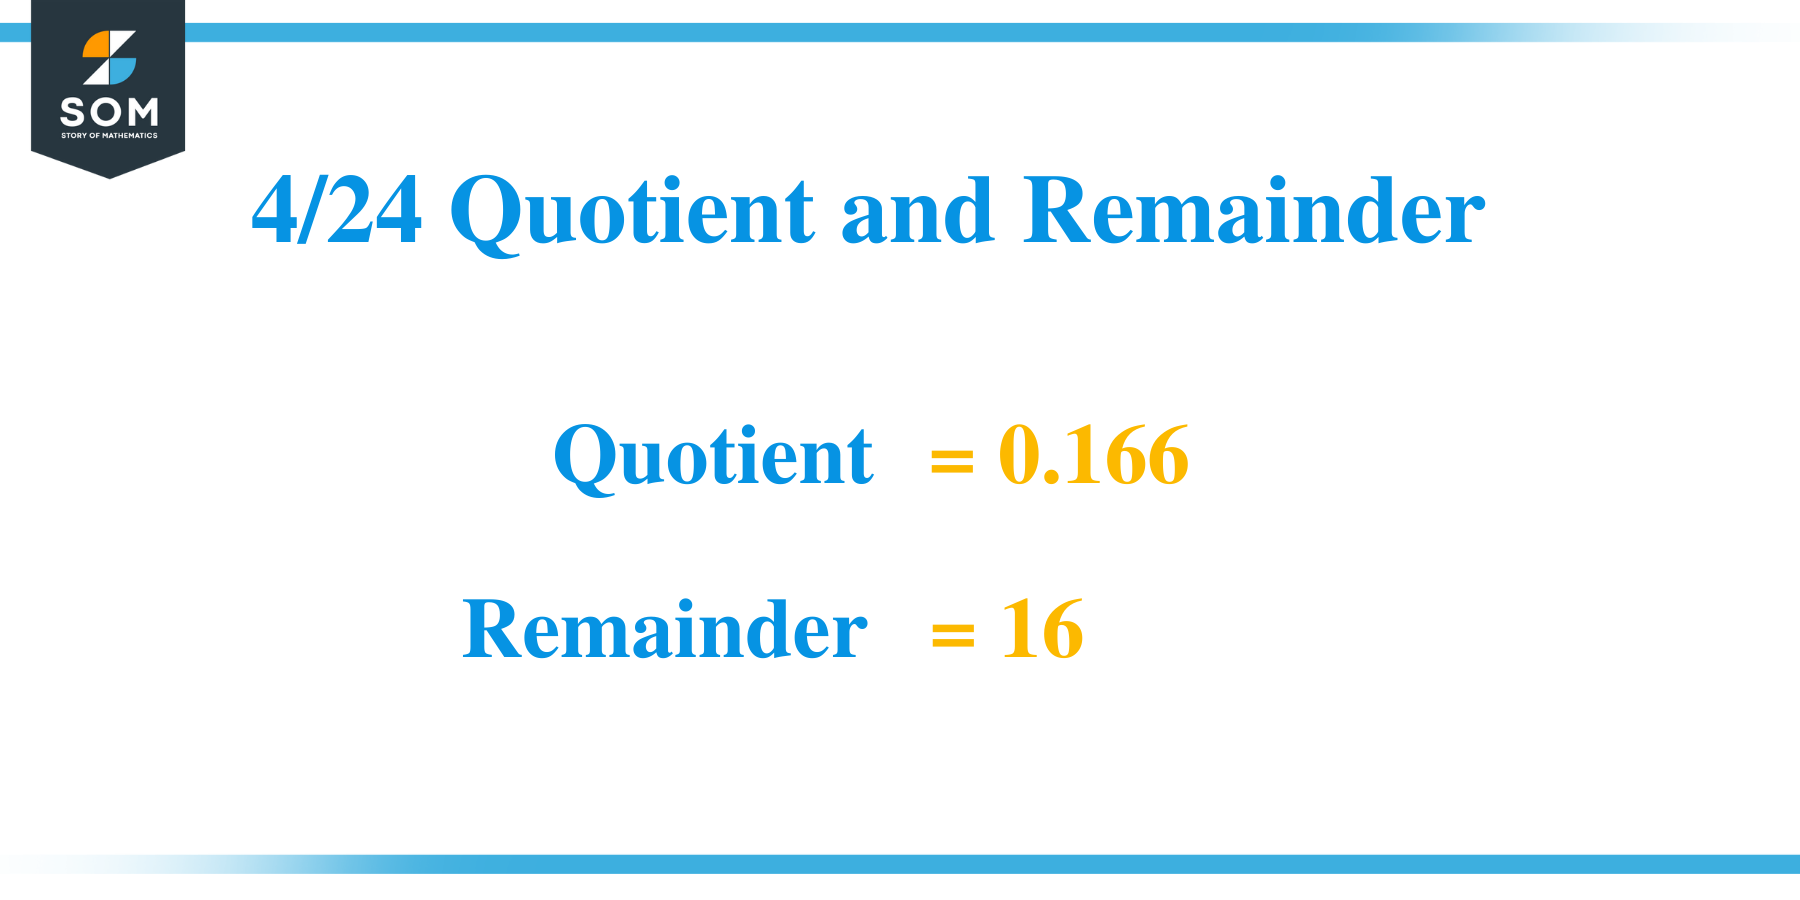 4 24 Quotient and Remainder